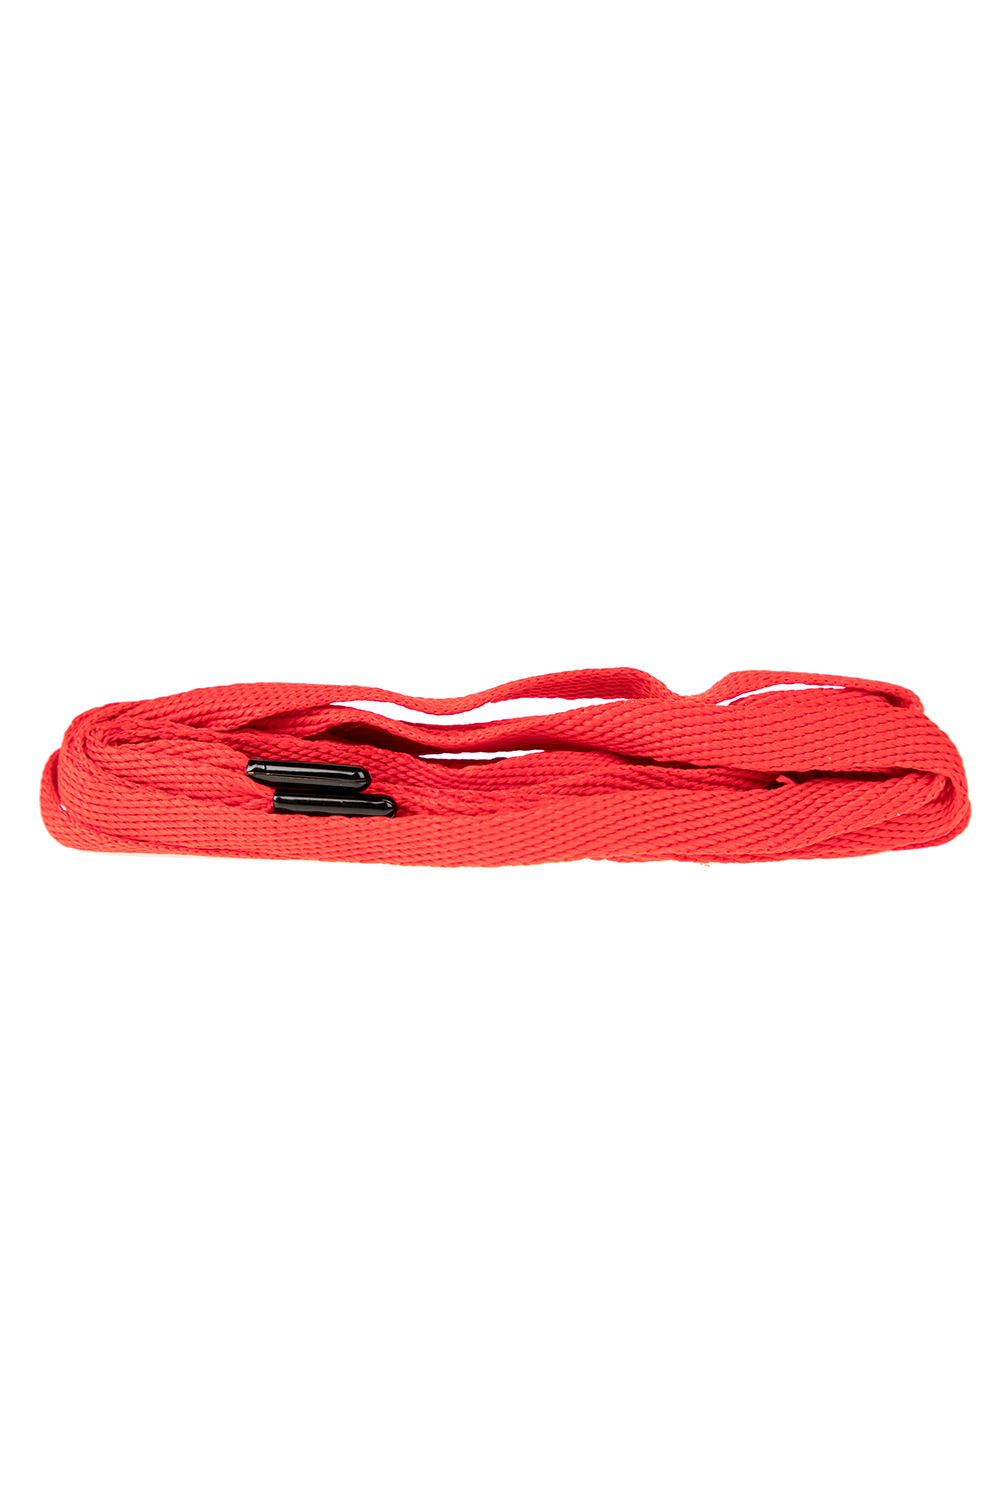 TUBELACES – Κορδόνια παπουτσιών TUBELACES HOOK UP PACK κόκκινα 1670445.0-0046